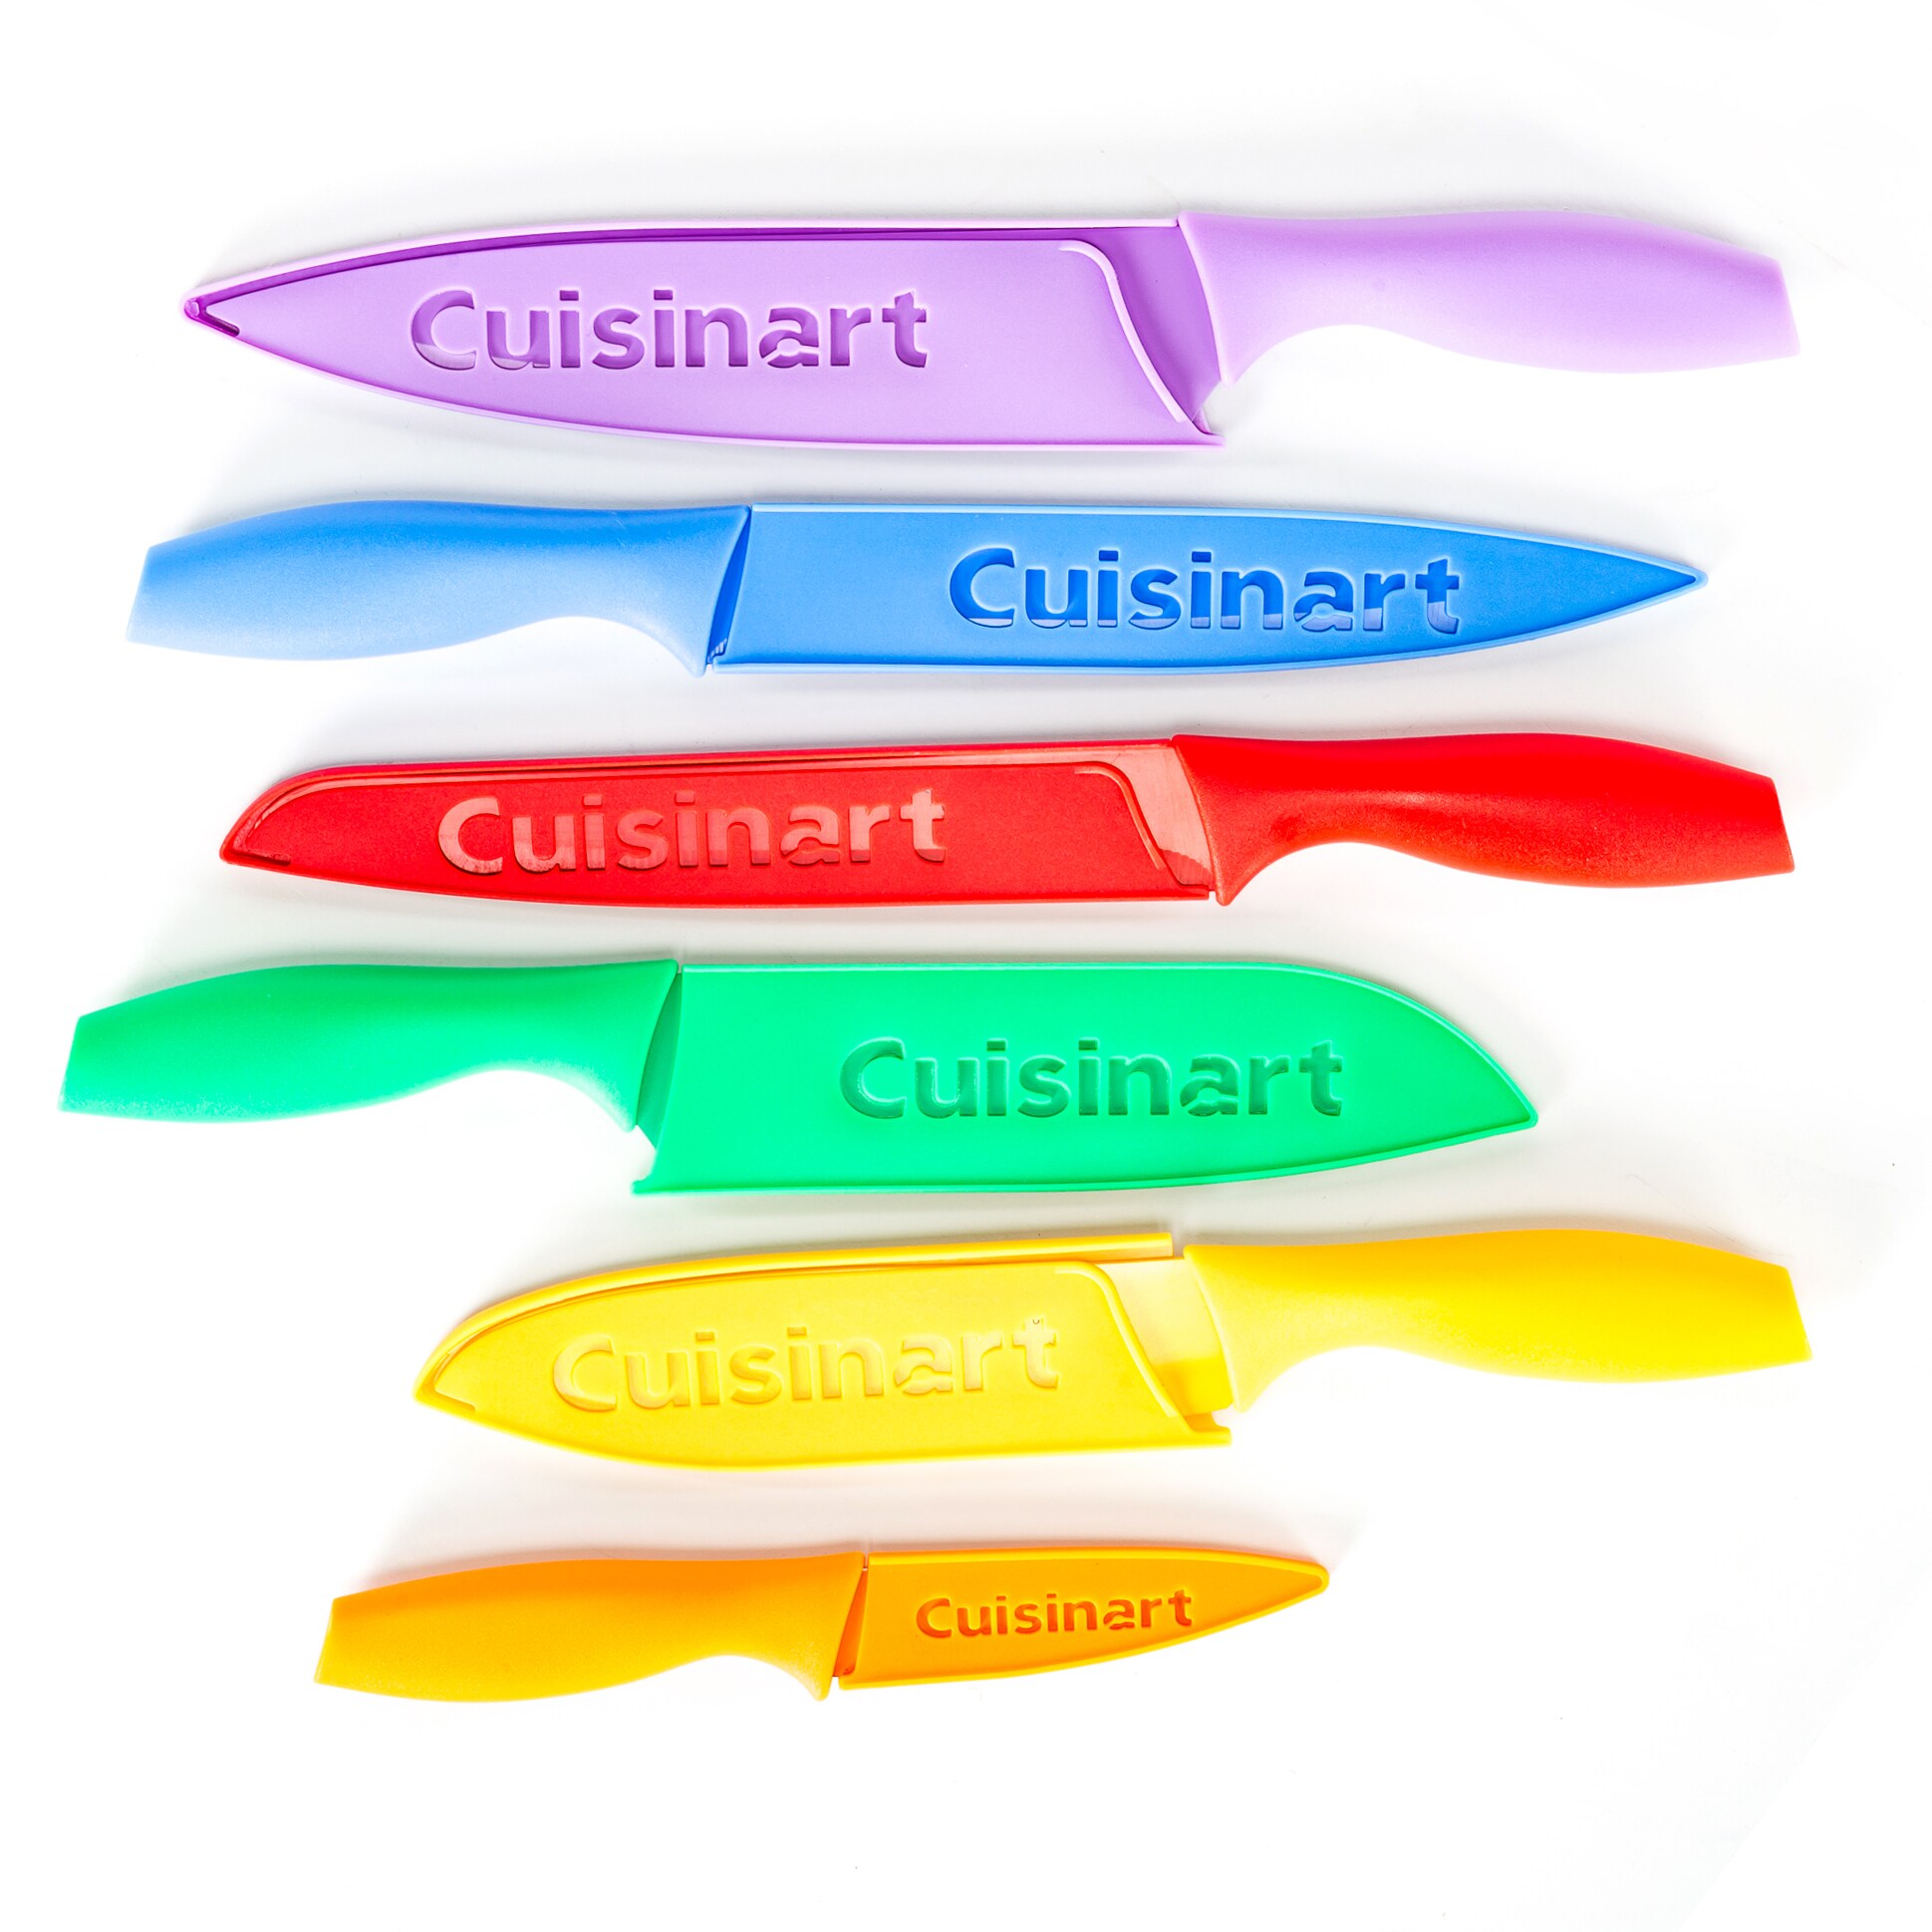  Cuisinart 12-Piece Kitchen Knife Set, Multicolor Advantage  Cutlery, C55-01-12PCKS: Boxed Knife Sets: Home & Kitchen